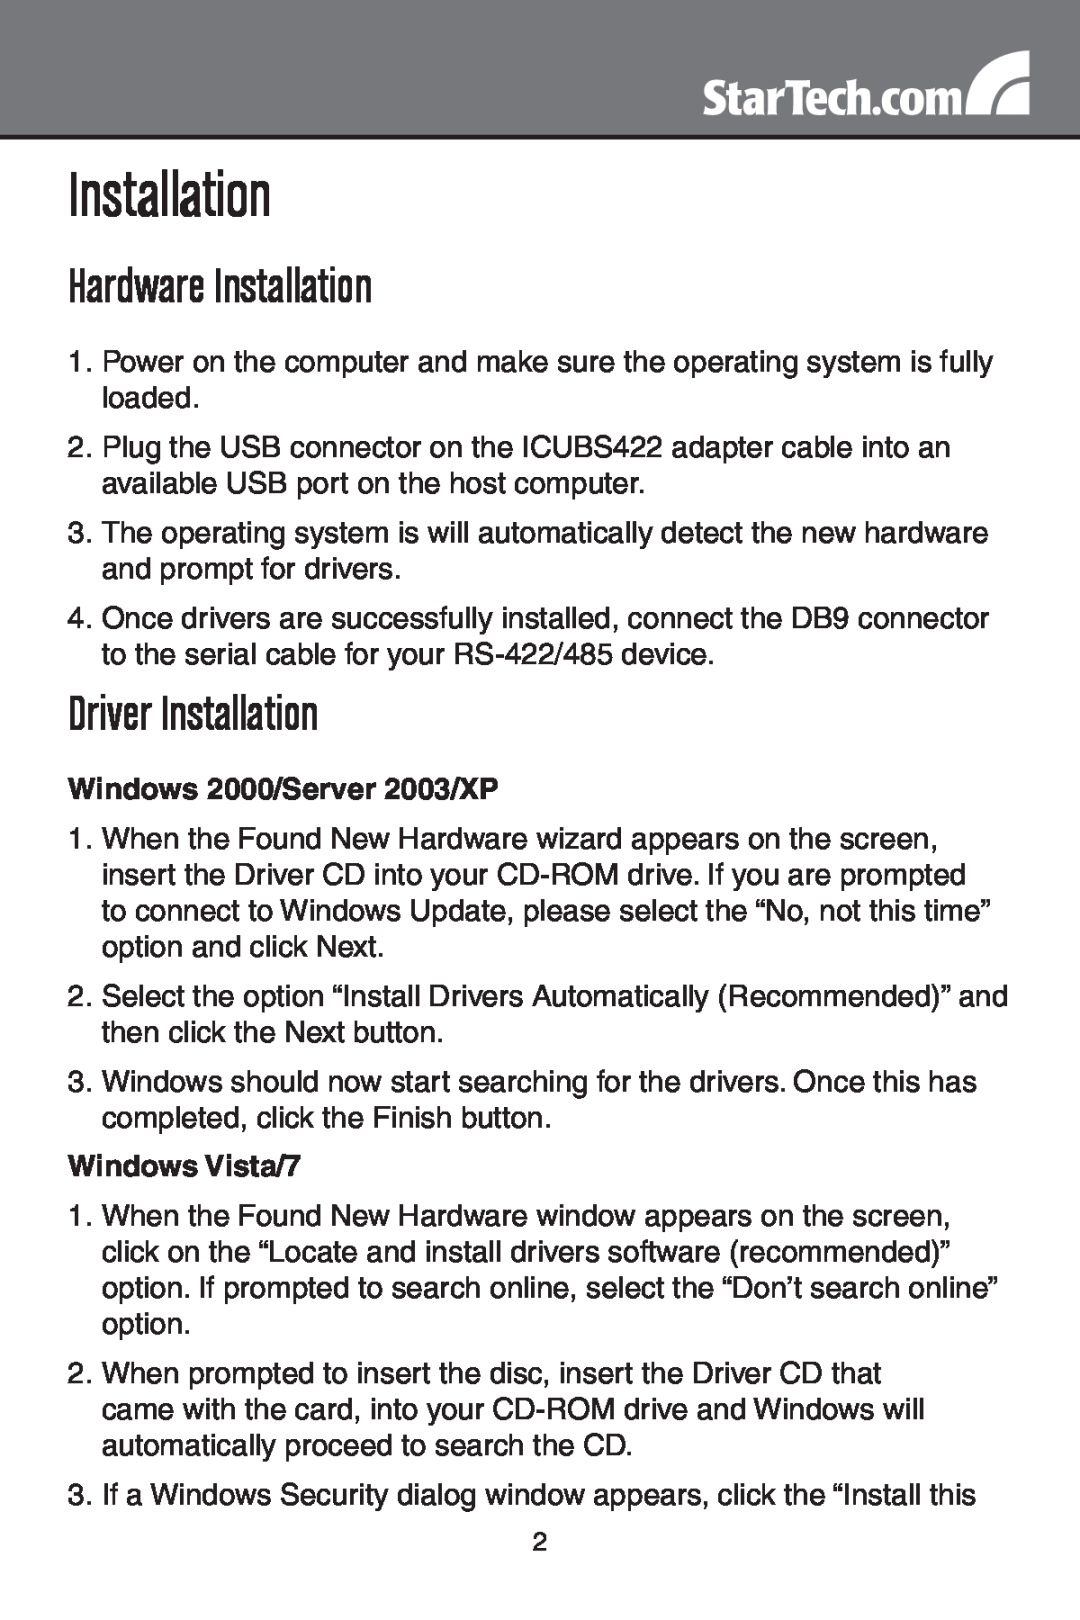 StarTech.com ICUSB422 Hardware Installation, Driver Installation, Windows 2000/Server 2003/XP, Windows Vista/7 